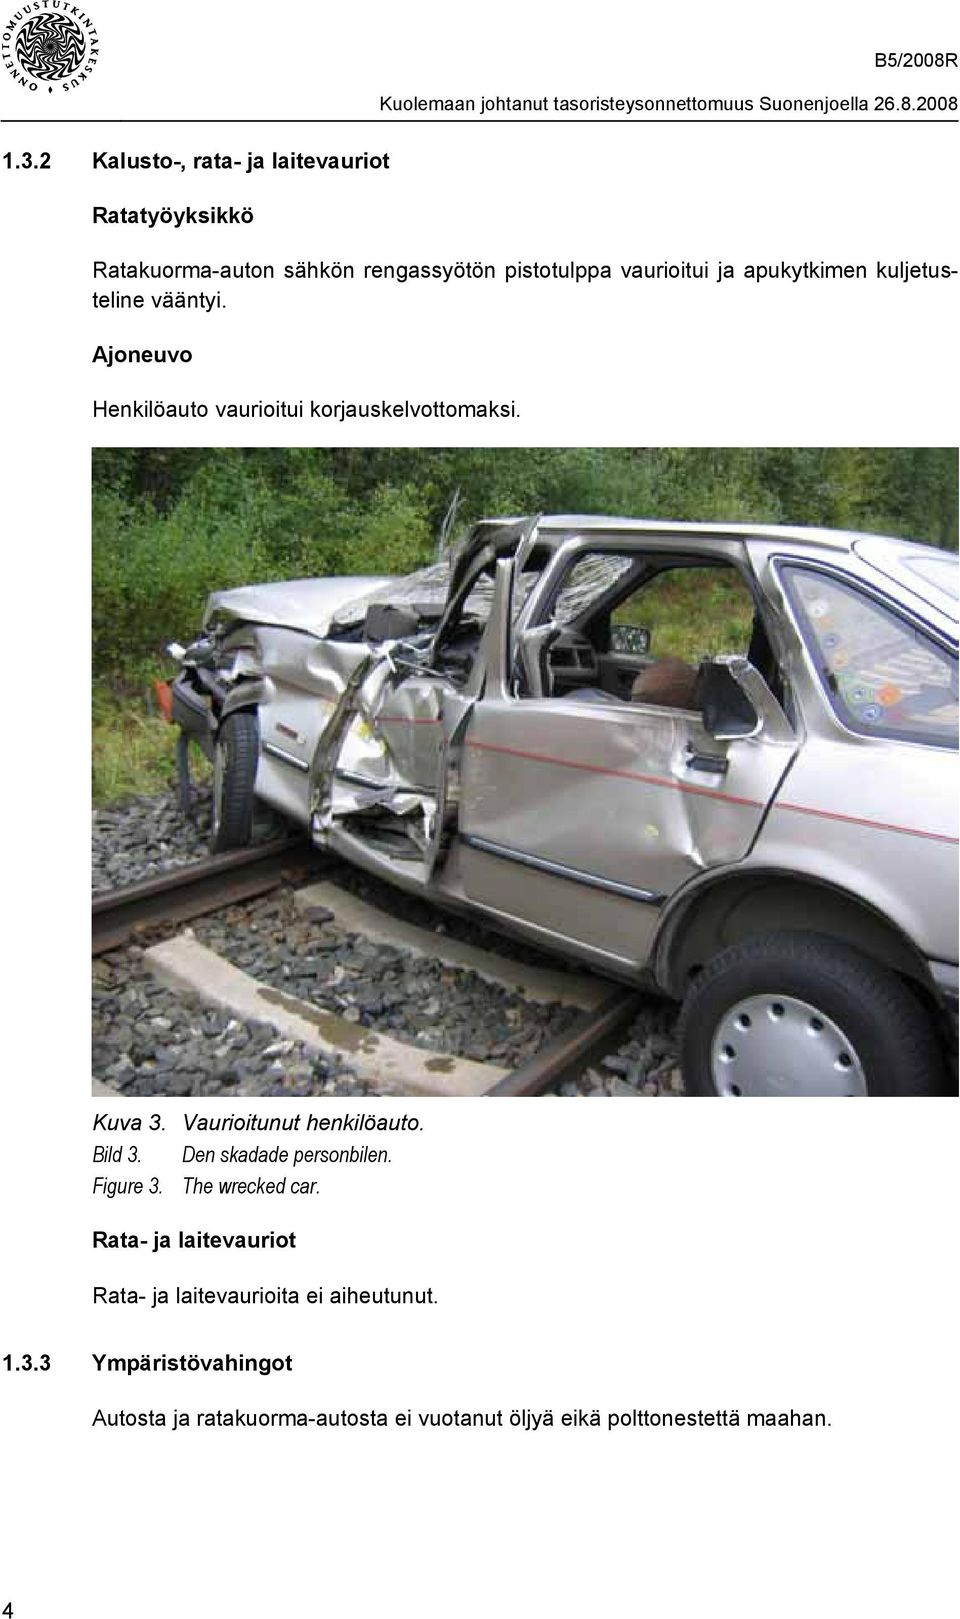 Vaurioitunut henkilöauto. Bild 3. Den skadade personbilen. Figure 3. The wrecked car.